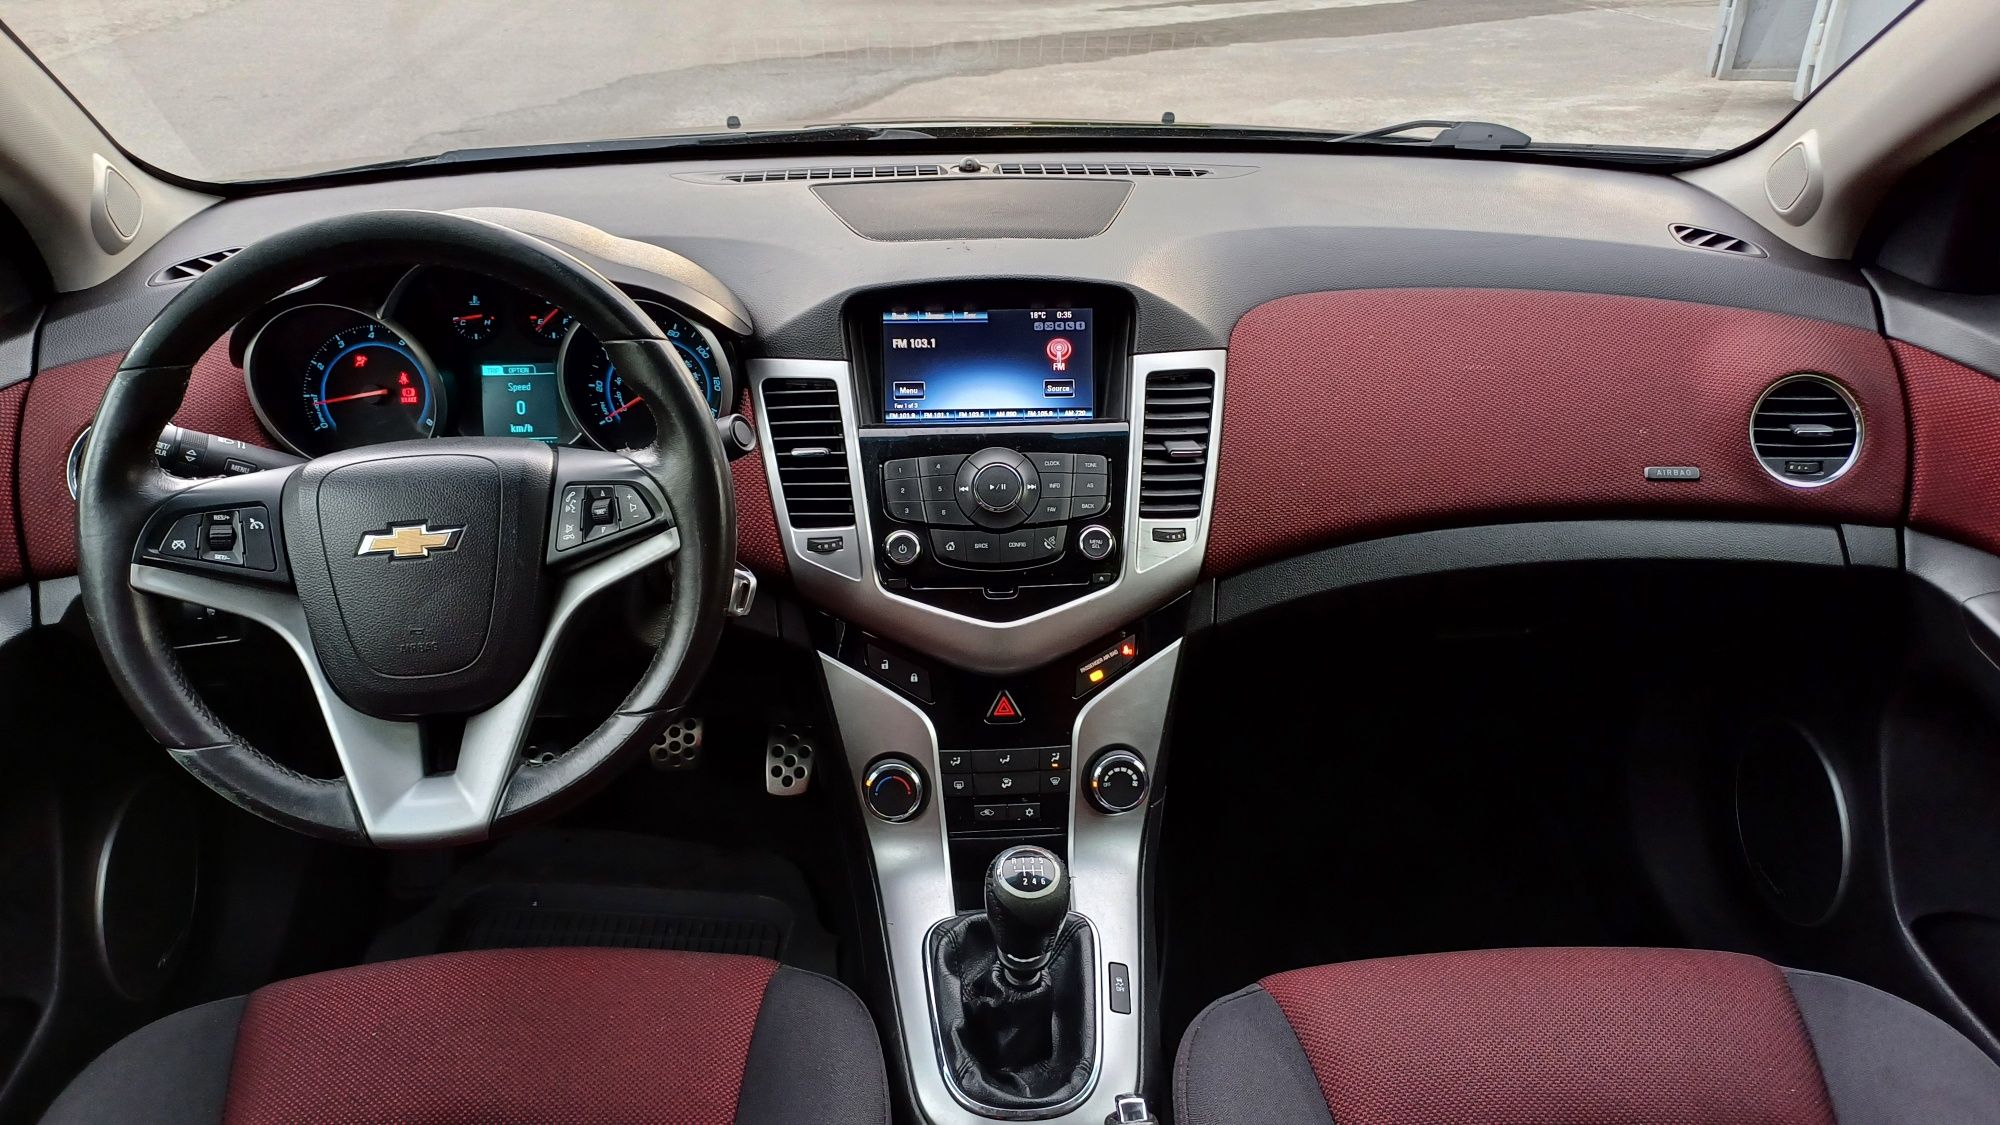 Chevrolet cruze 2014 turbo 1.4